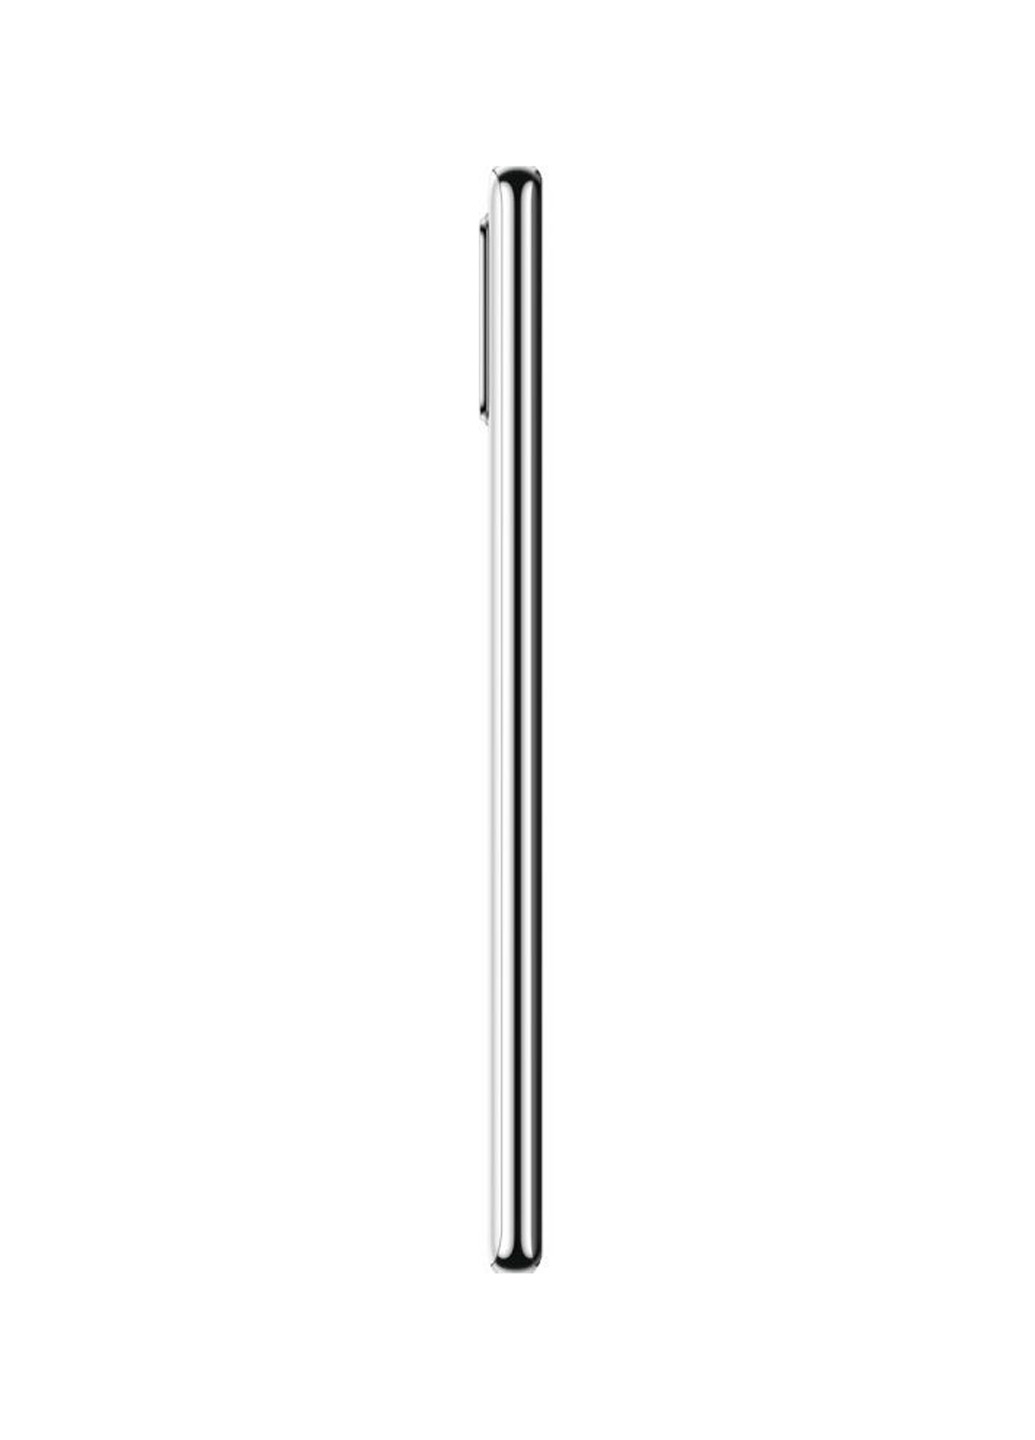 Смартфон Huawei p30 lite 4/128gb pearl white (mar-lх1a) (130359124)